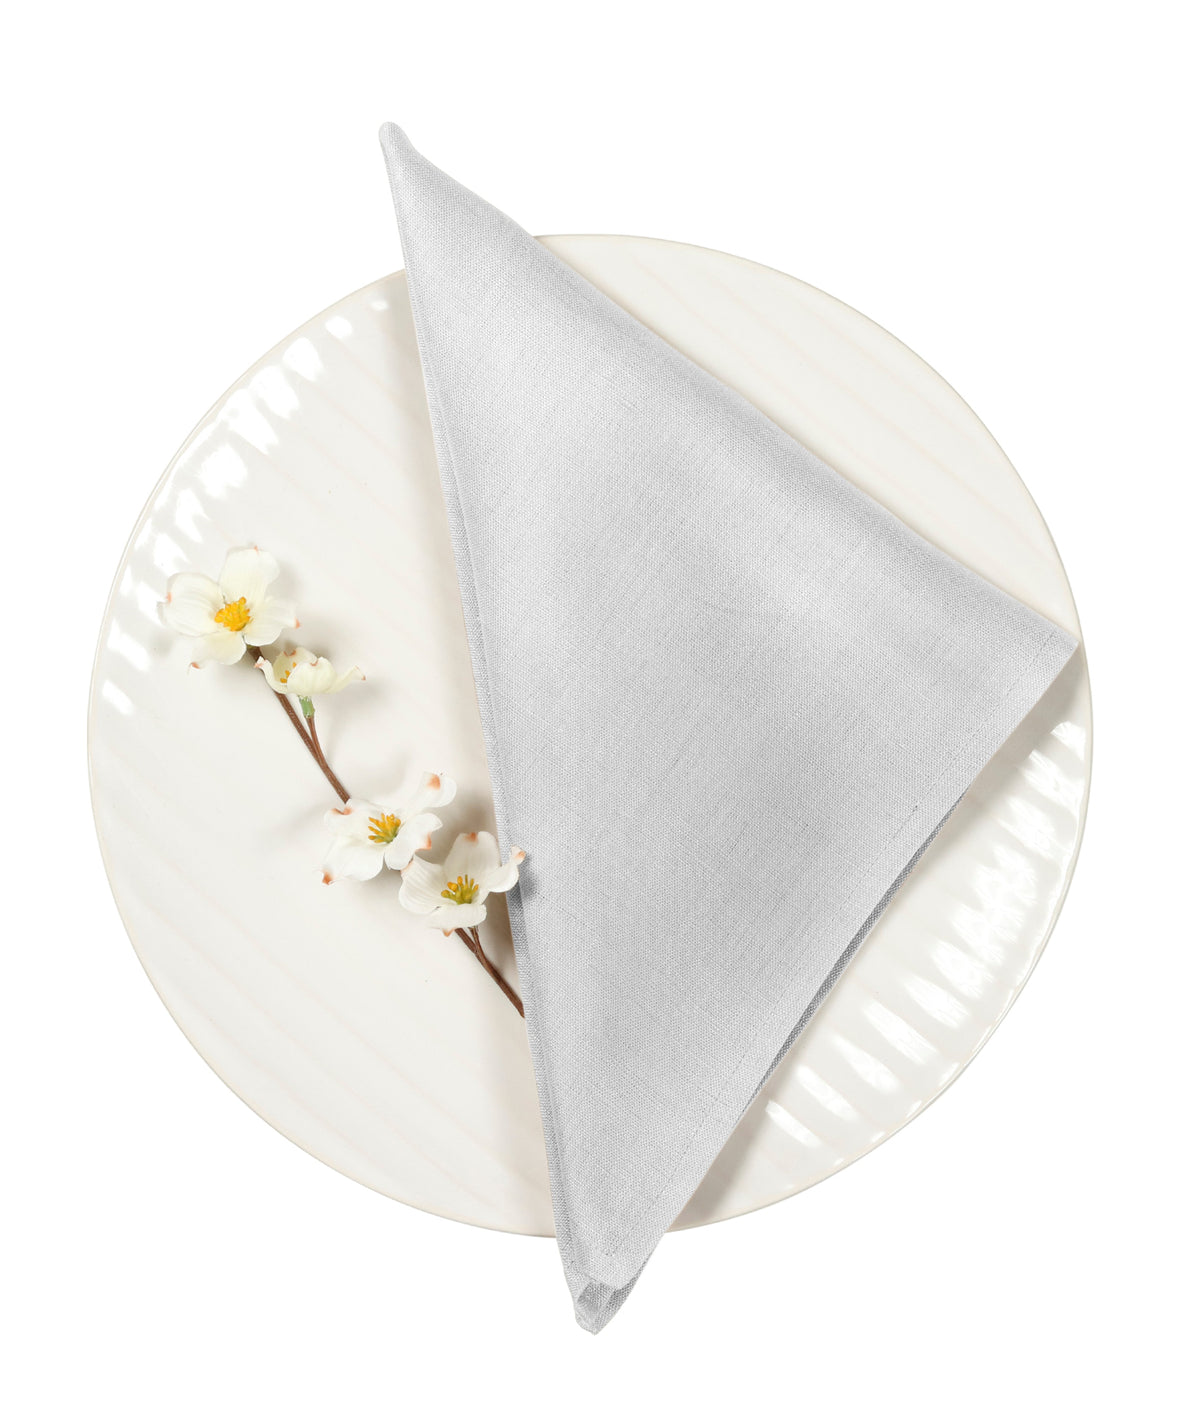 Silver Grey Linen Dinner Napkin 18 x 18 Inch Set of 4 - Hemmed